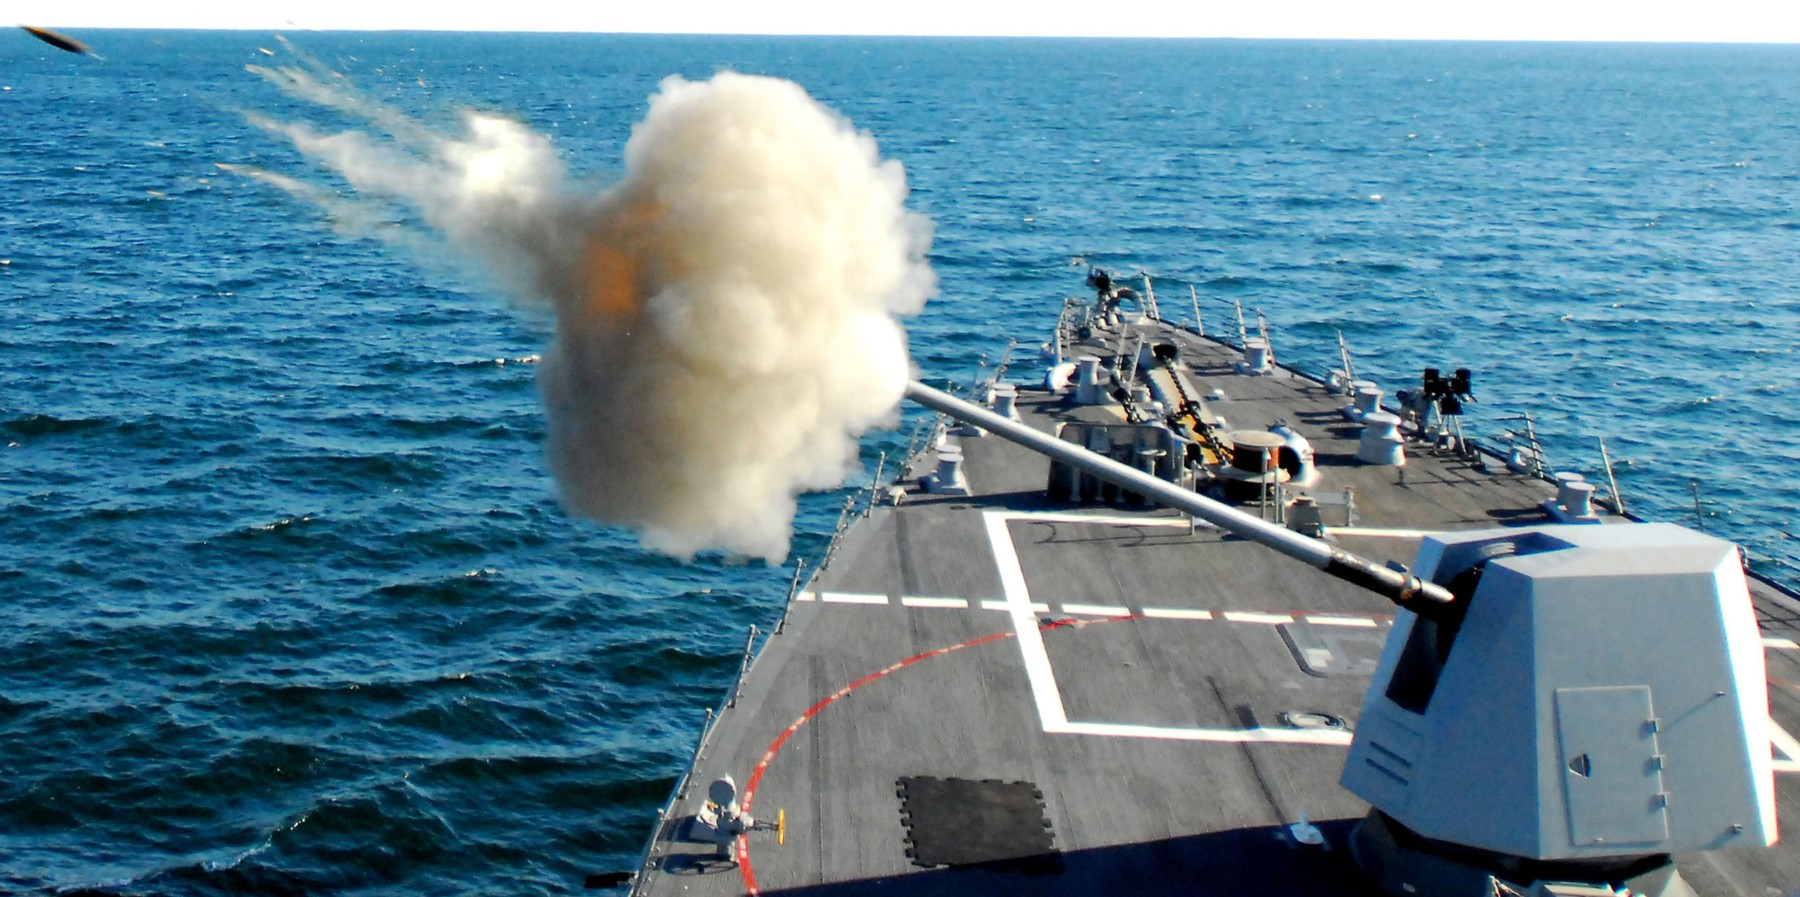 ddg-98 uss forrest sherman arleigh burke class guided missile destroyer aegis us navy mk.45 gun fire 09